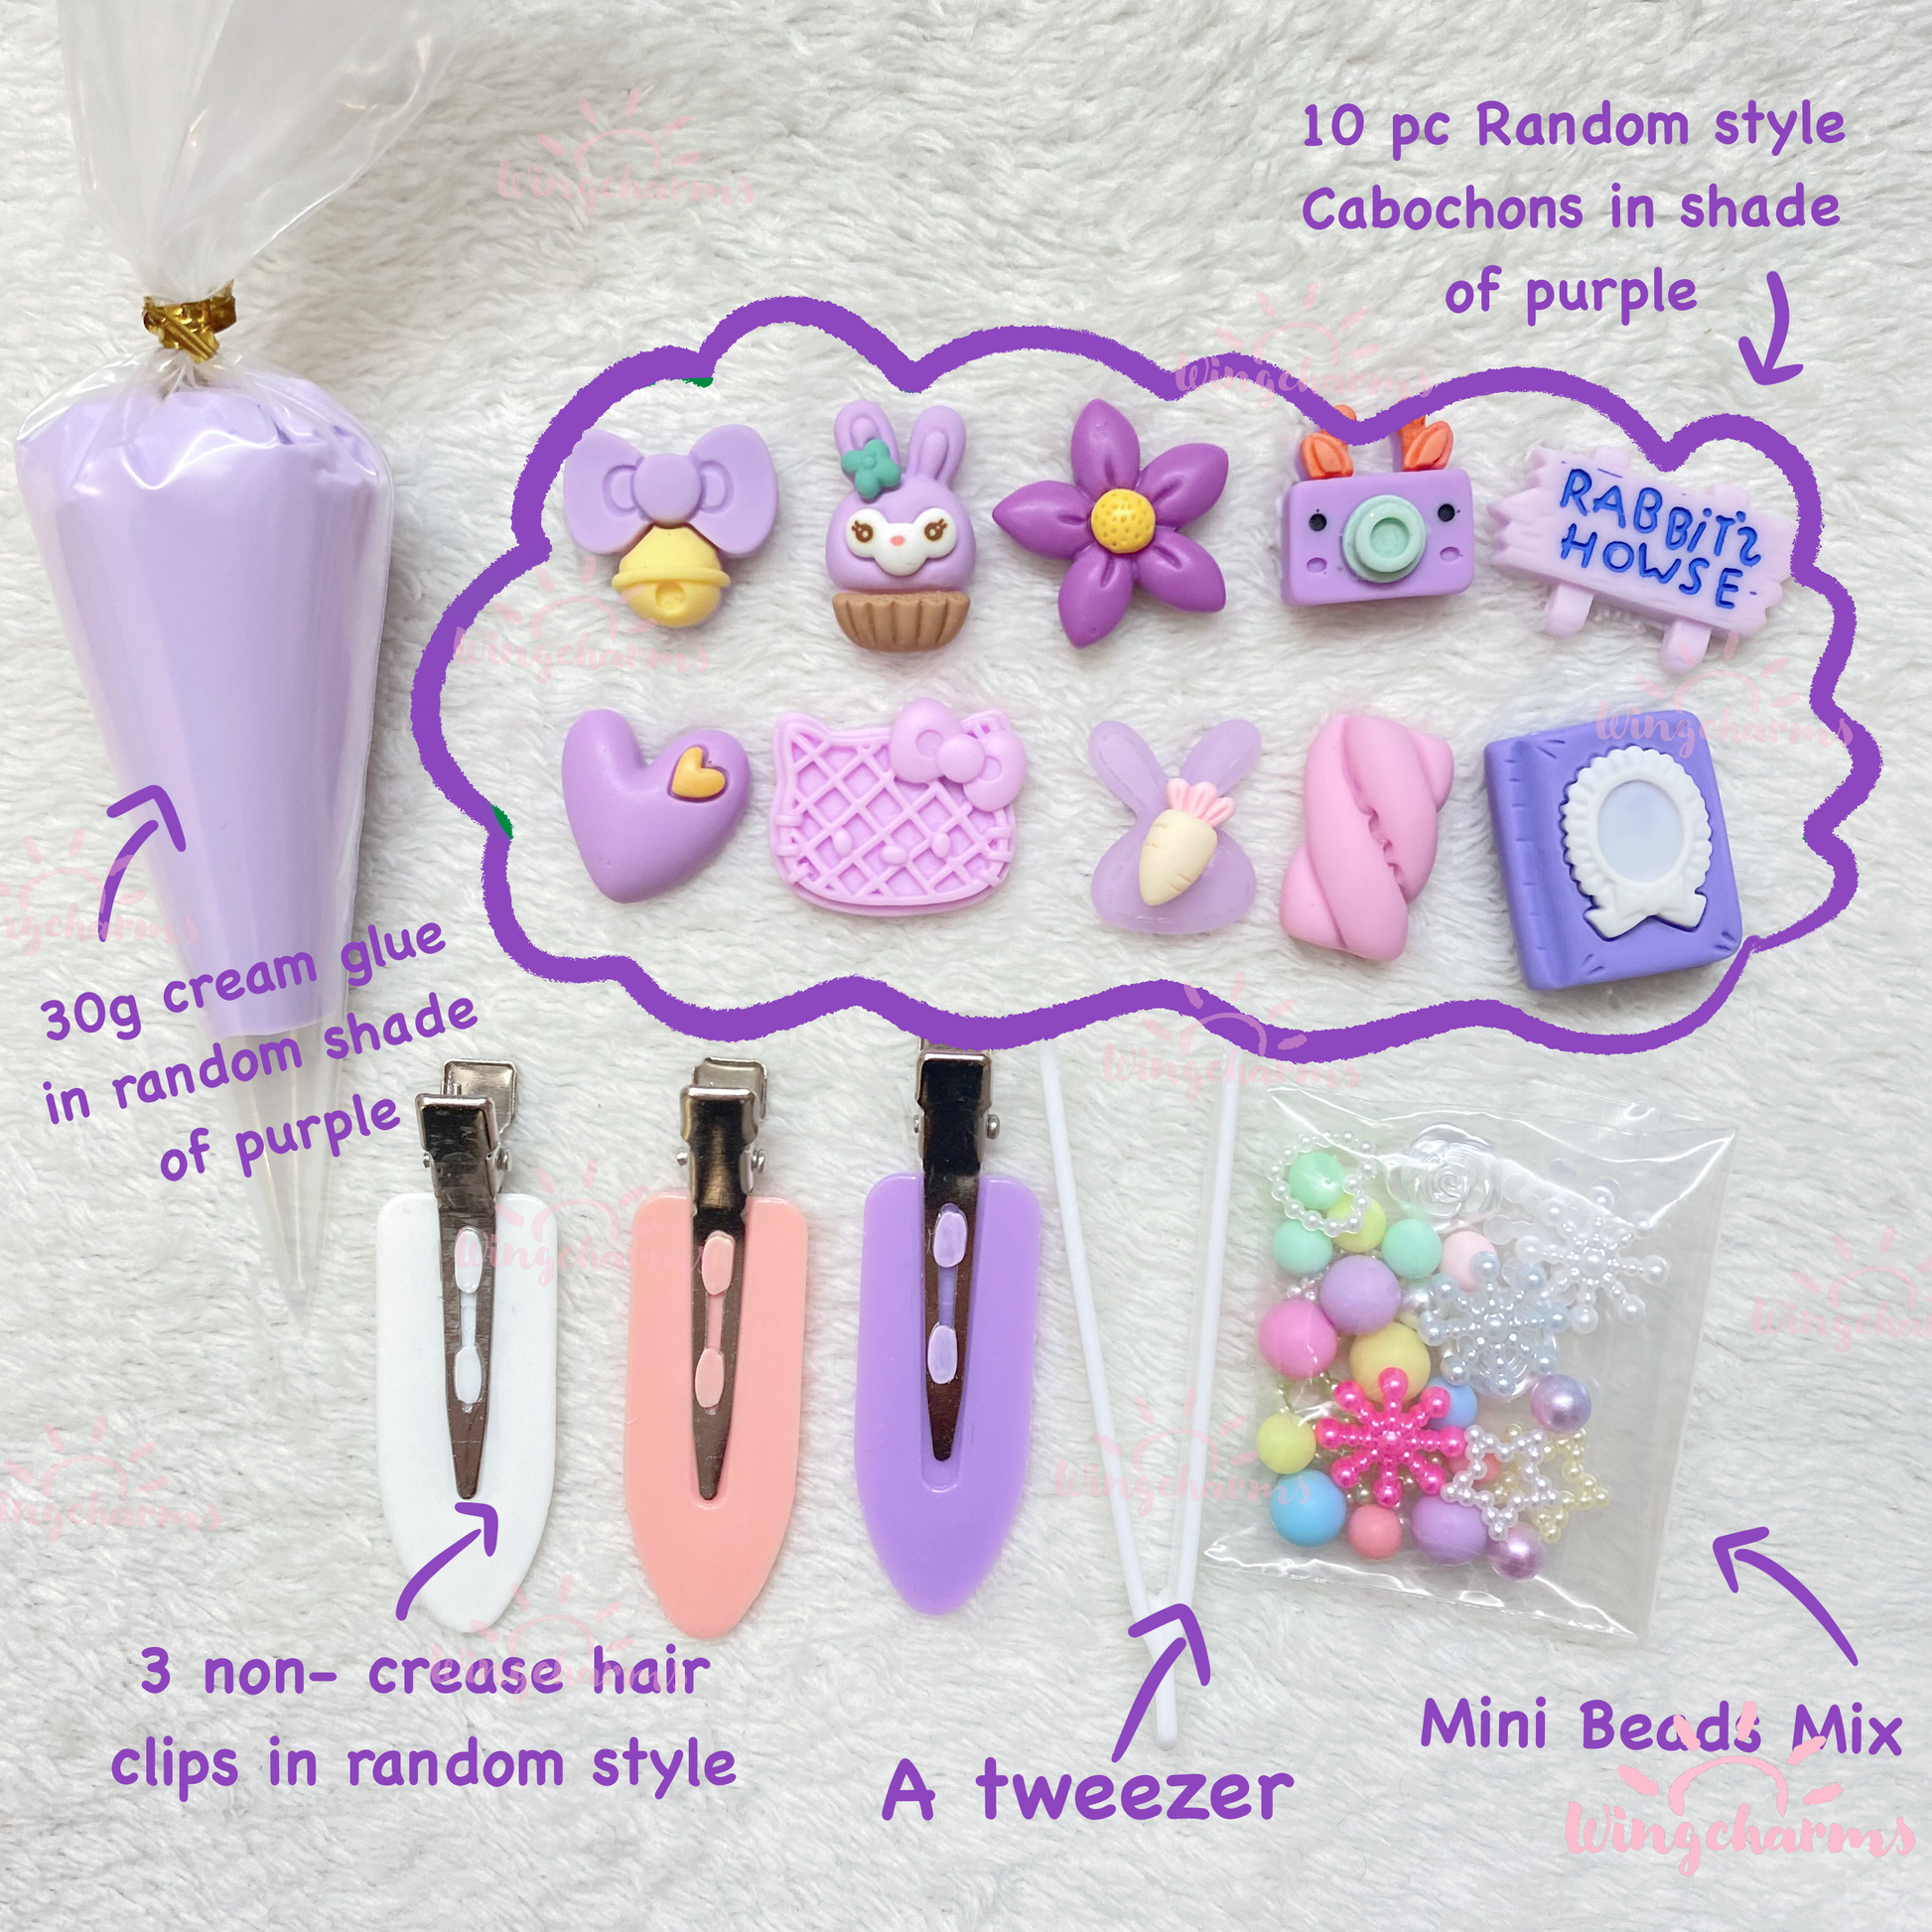 DIY Decoden Supply Kit Cream Glue Great for Beginners Children Birthday  Parties DIY Kits Hair Brush Compact Mirror Mirror Brush 2in1 